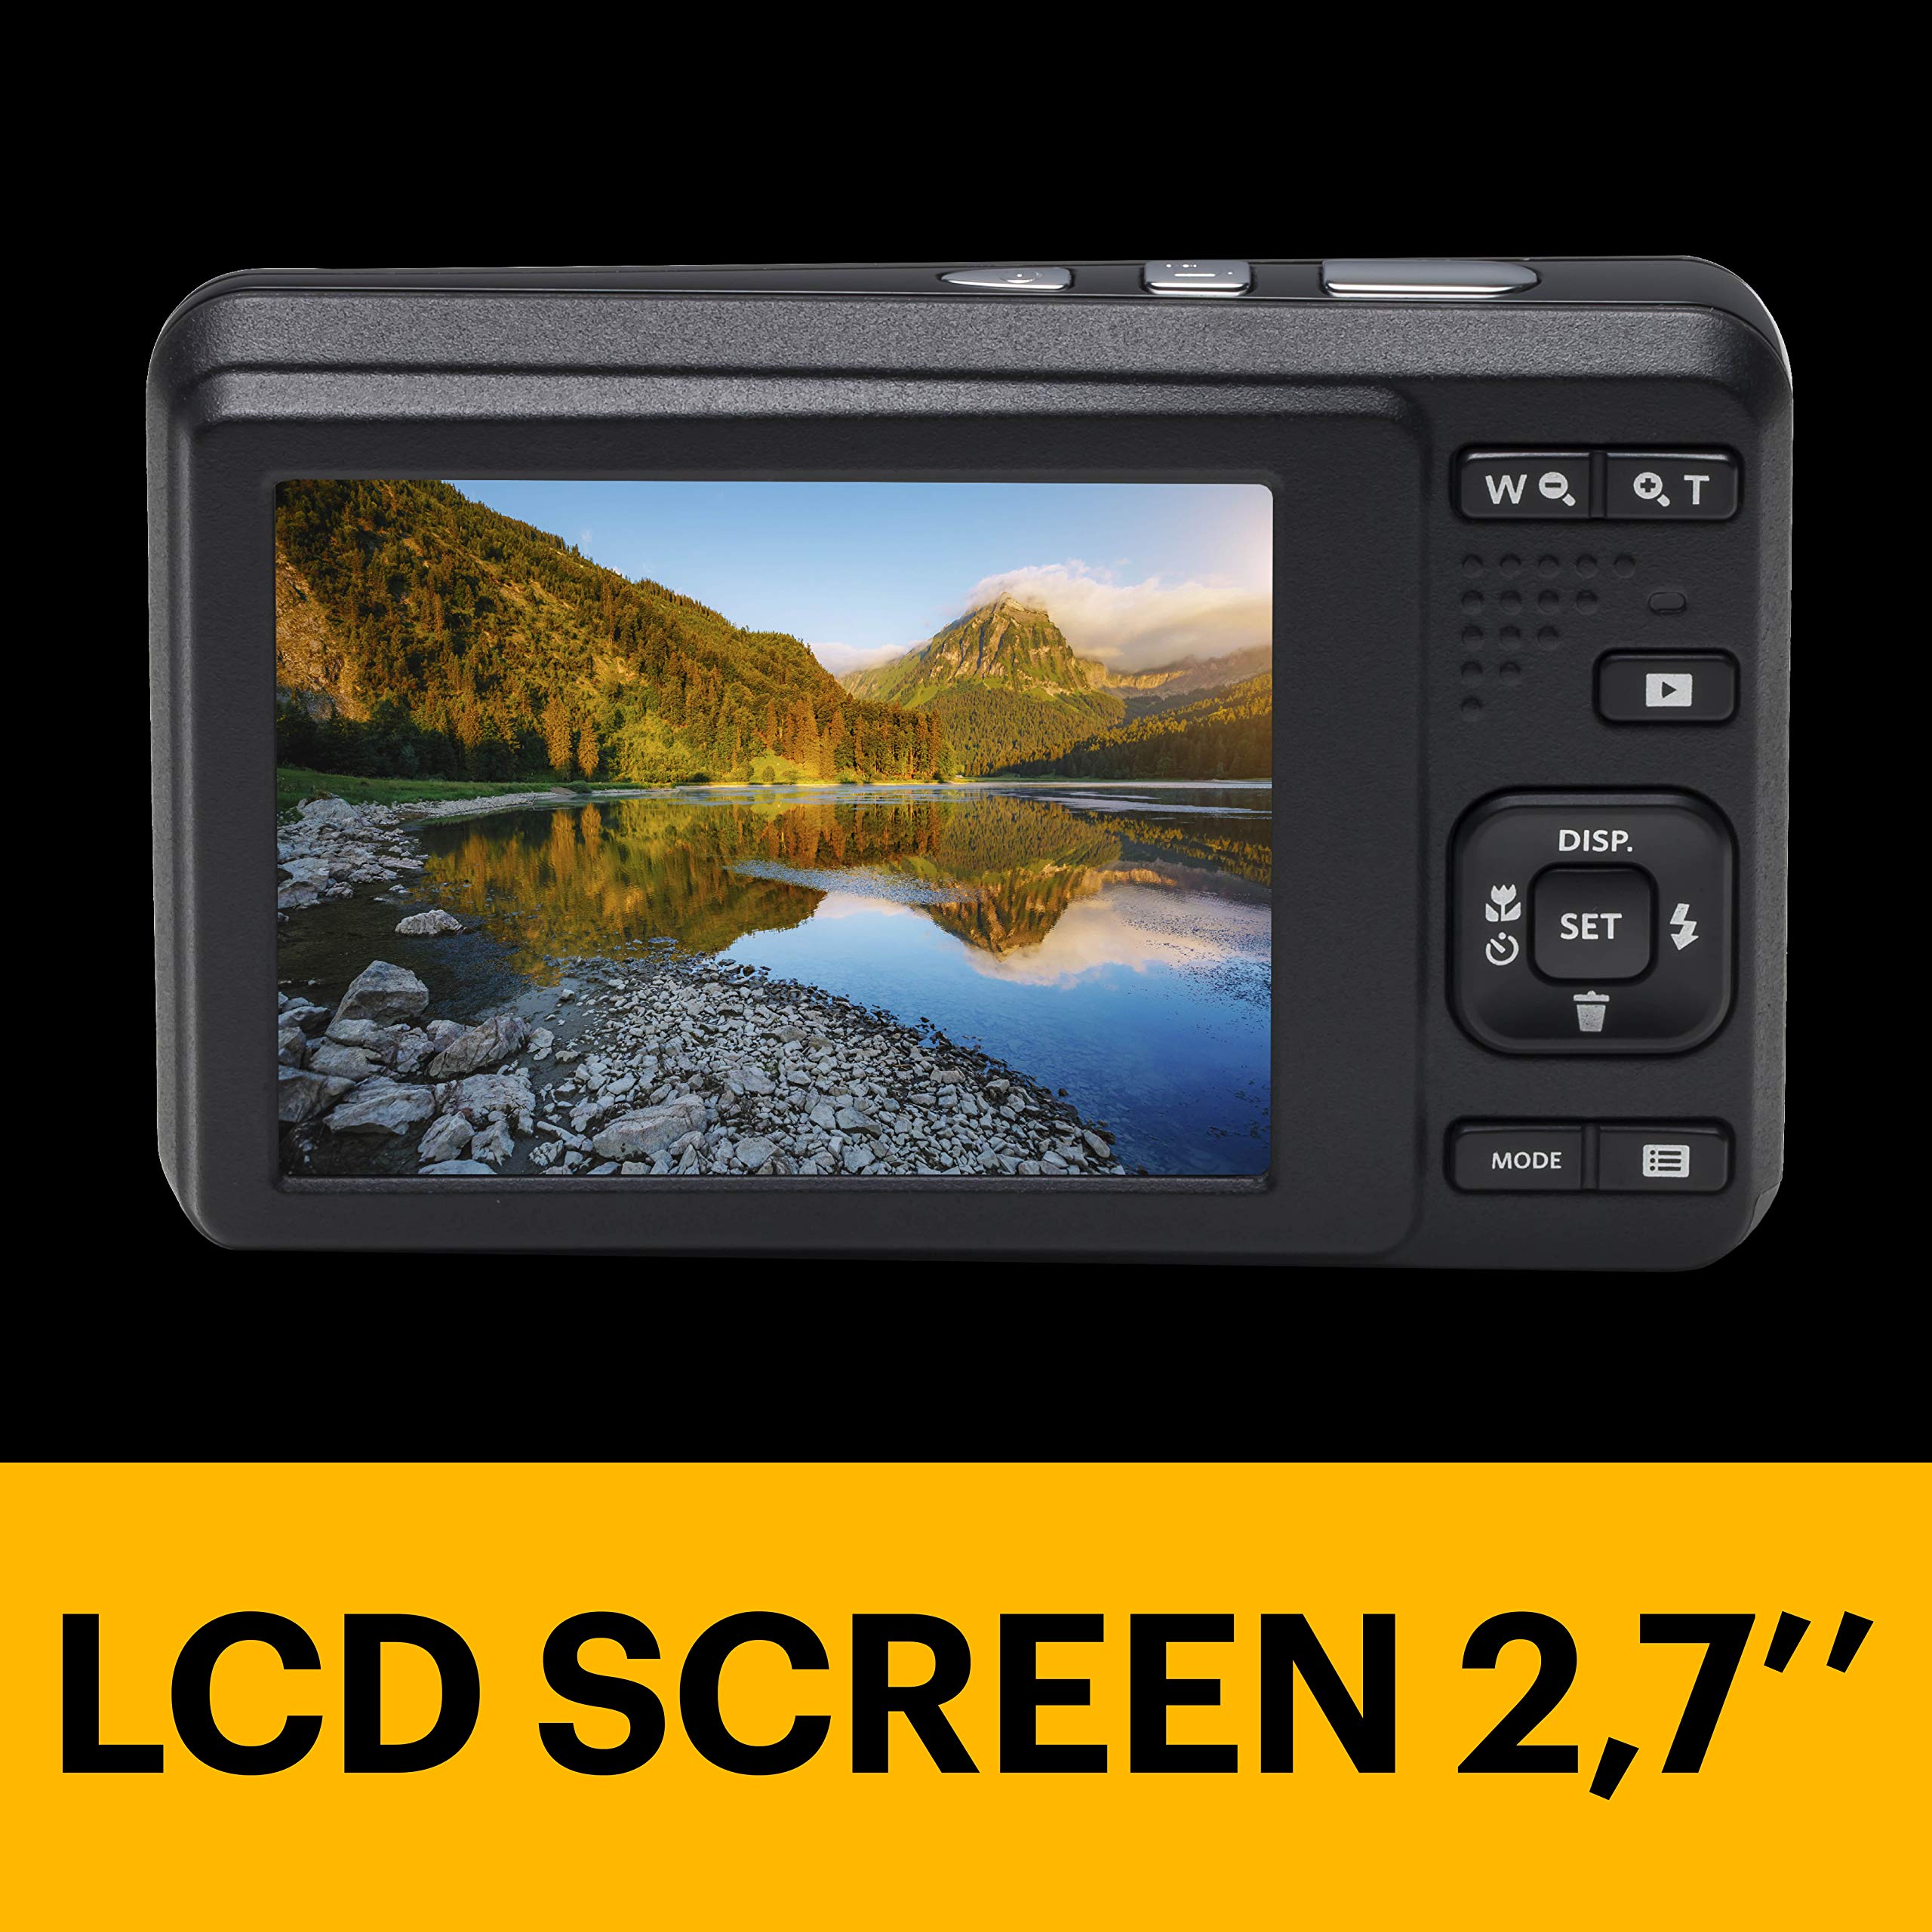 Kodak FZ53-BL Point and Shoot Digital Camera with 2.7